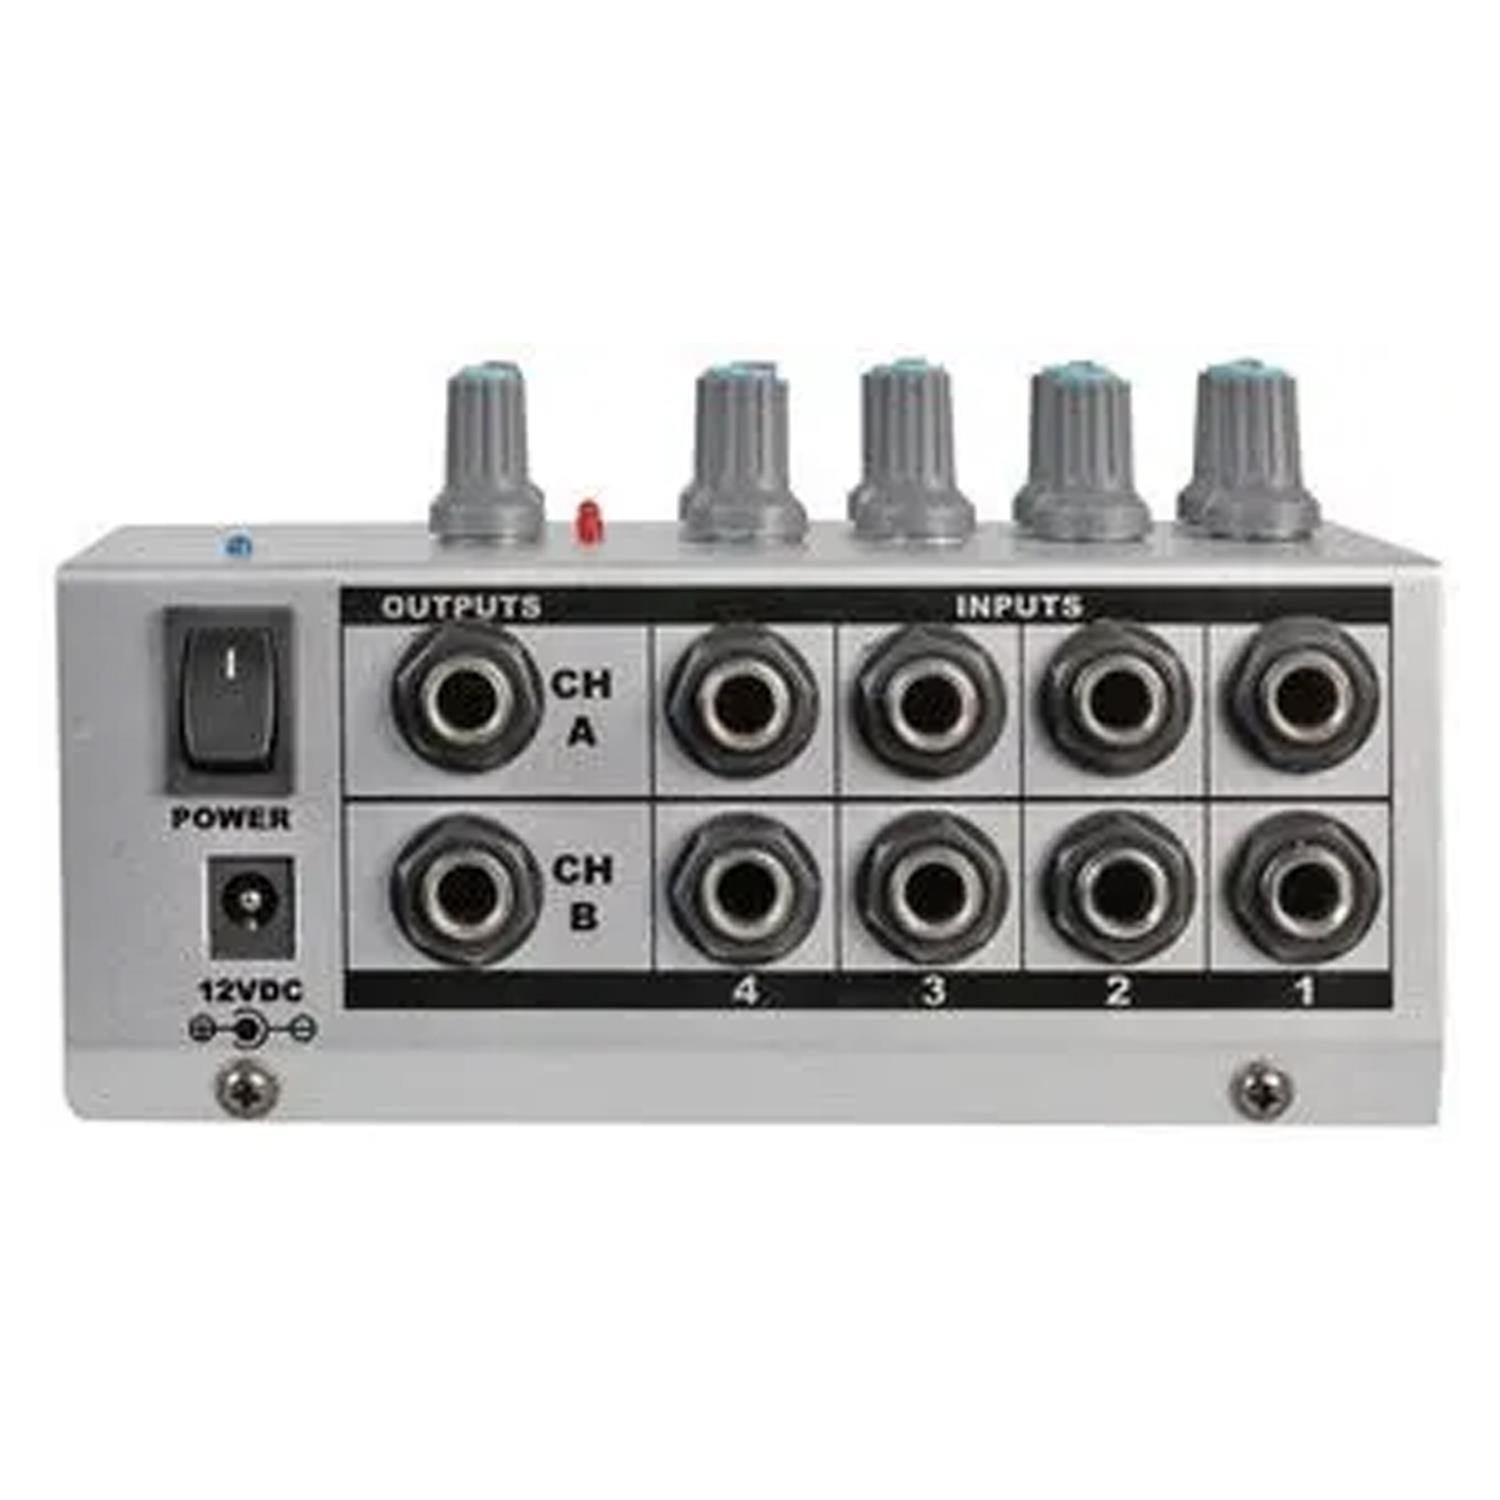 Pulse MLX402 Compact Line Mixer - DY Pro Audio